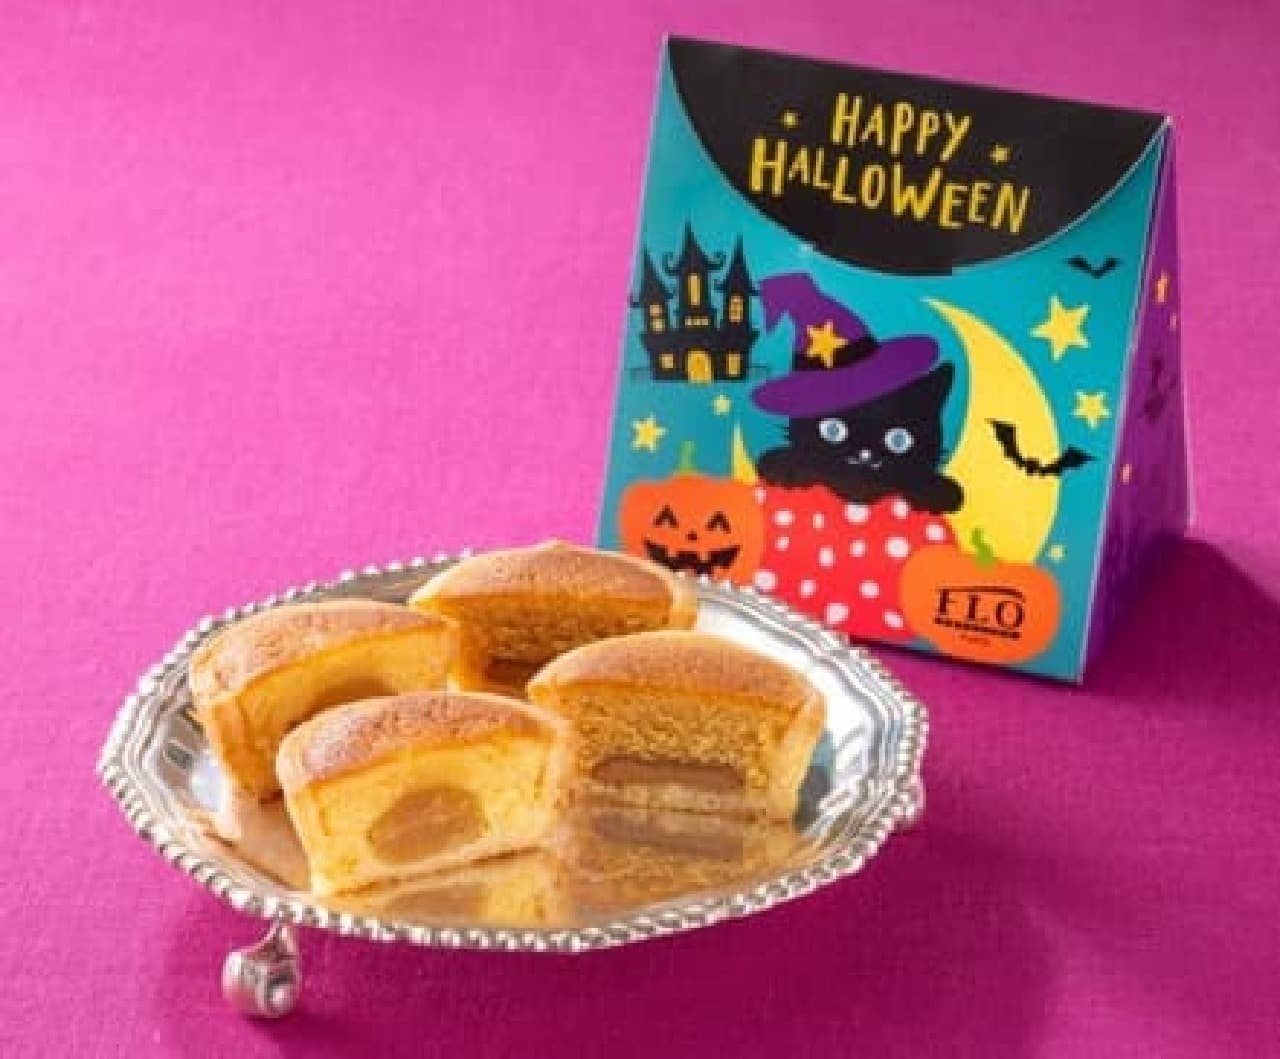 FLO "Halloween Petit Tart BOX - Marron & Caramel